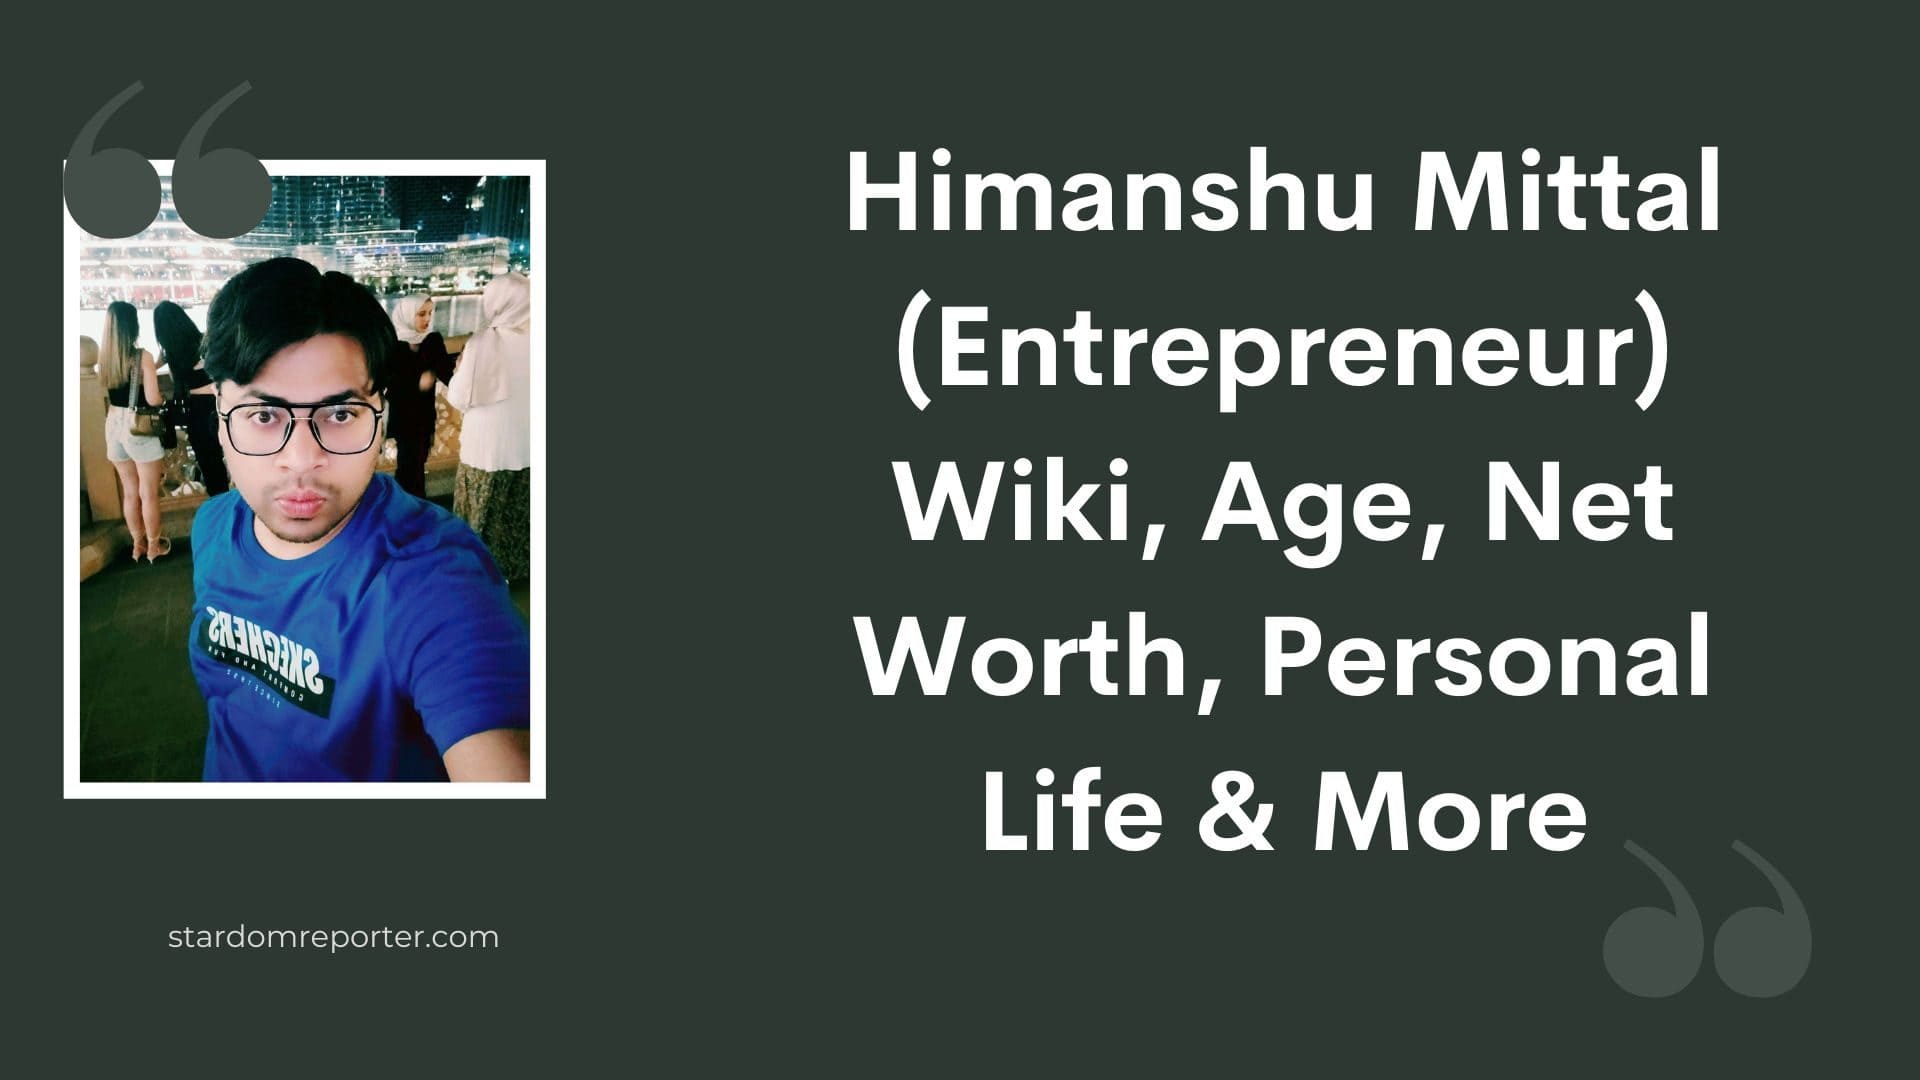 Himanshu Mittal (Entrepreneur) Wiki, Age, Personal Life, Net Worth & More - 23